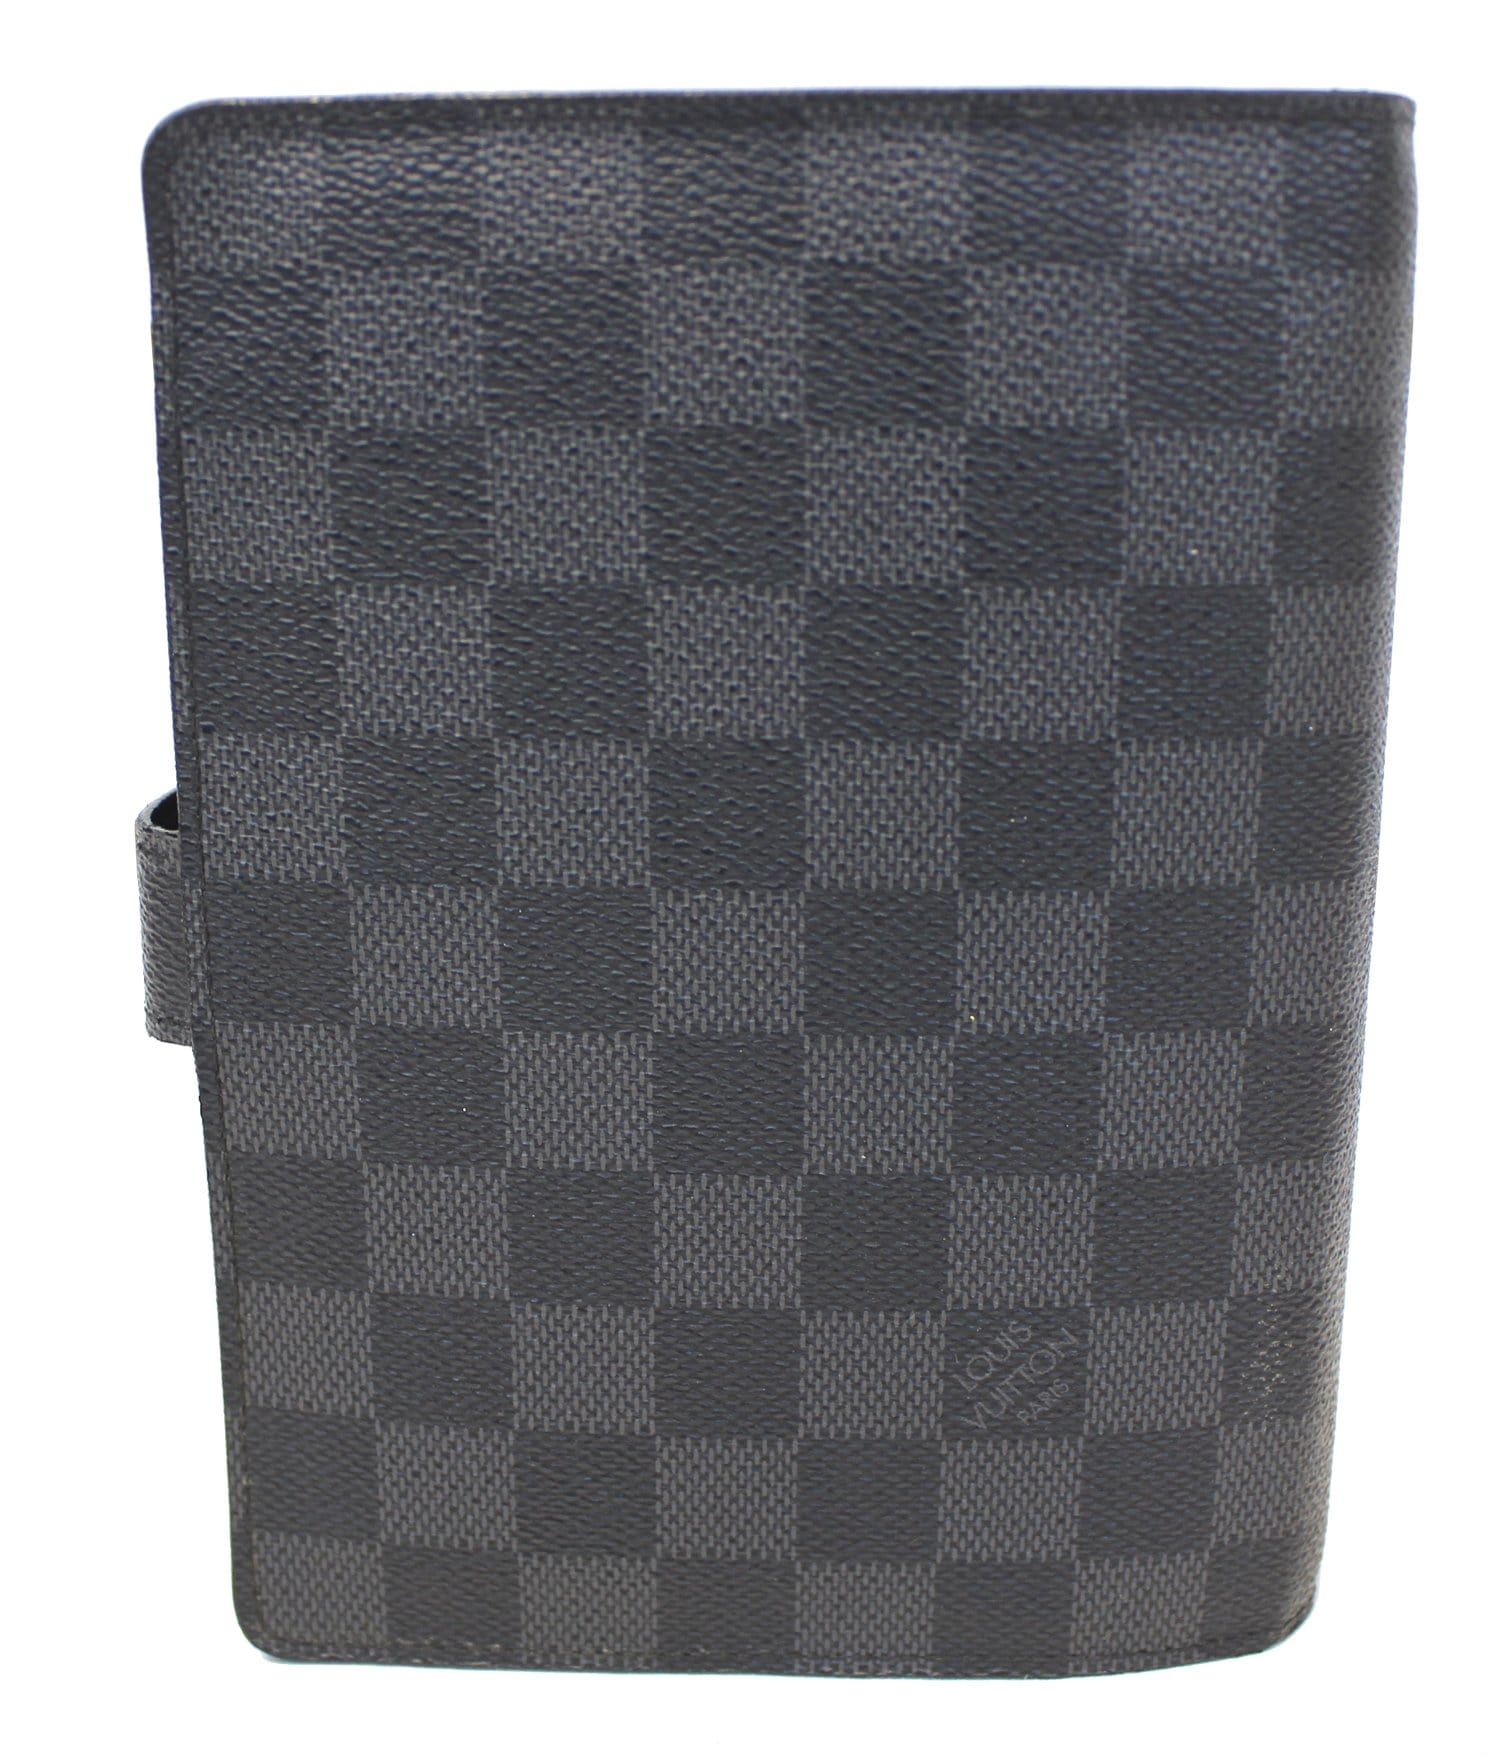 Louis Vuitton Black Damier Graphite Agenda MM Desk Folder 1115lv22